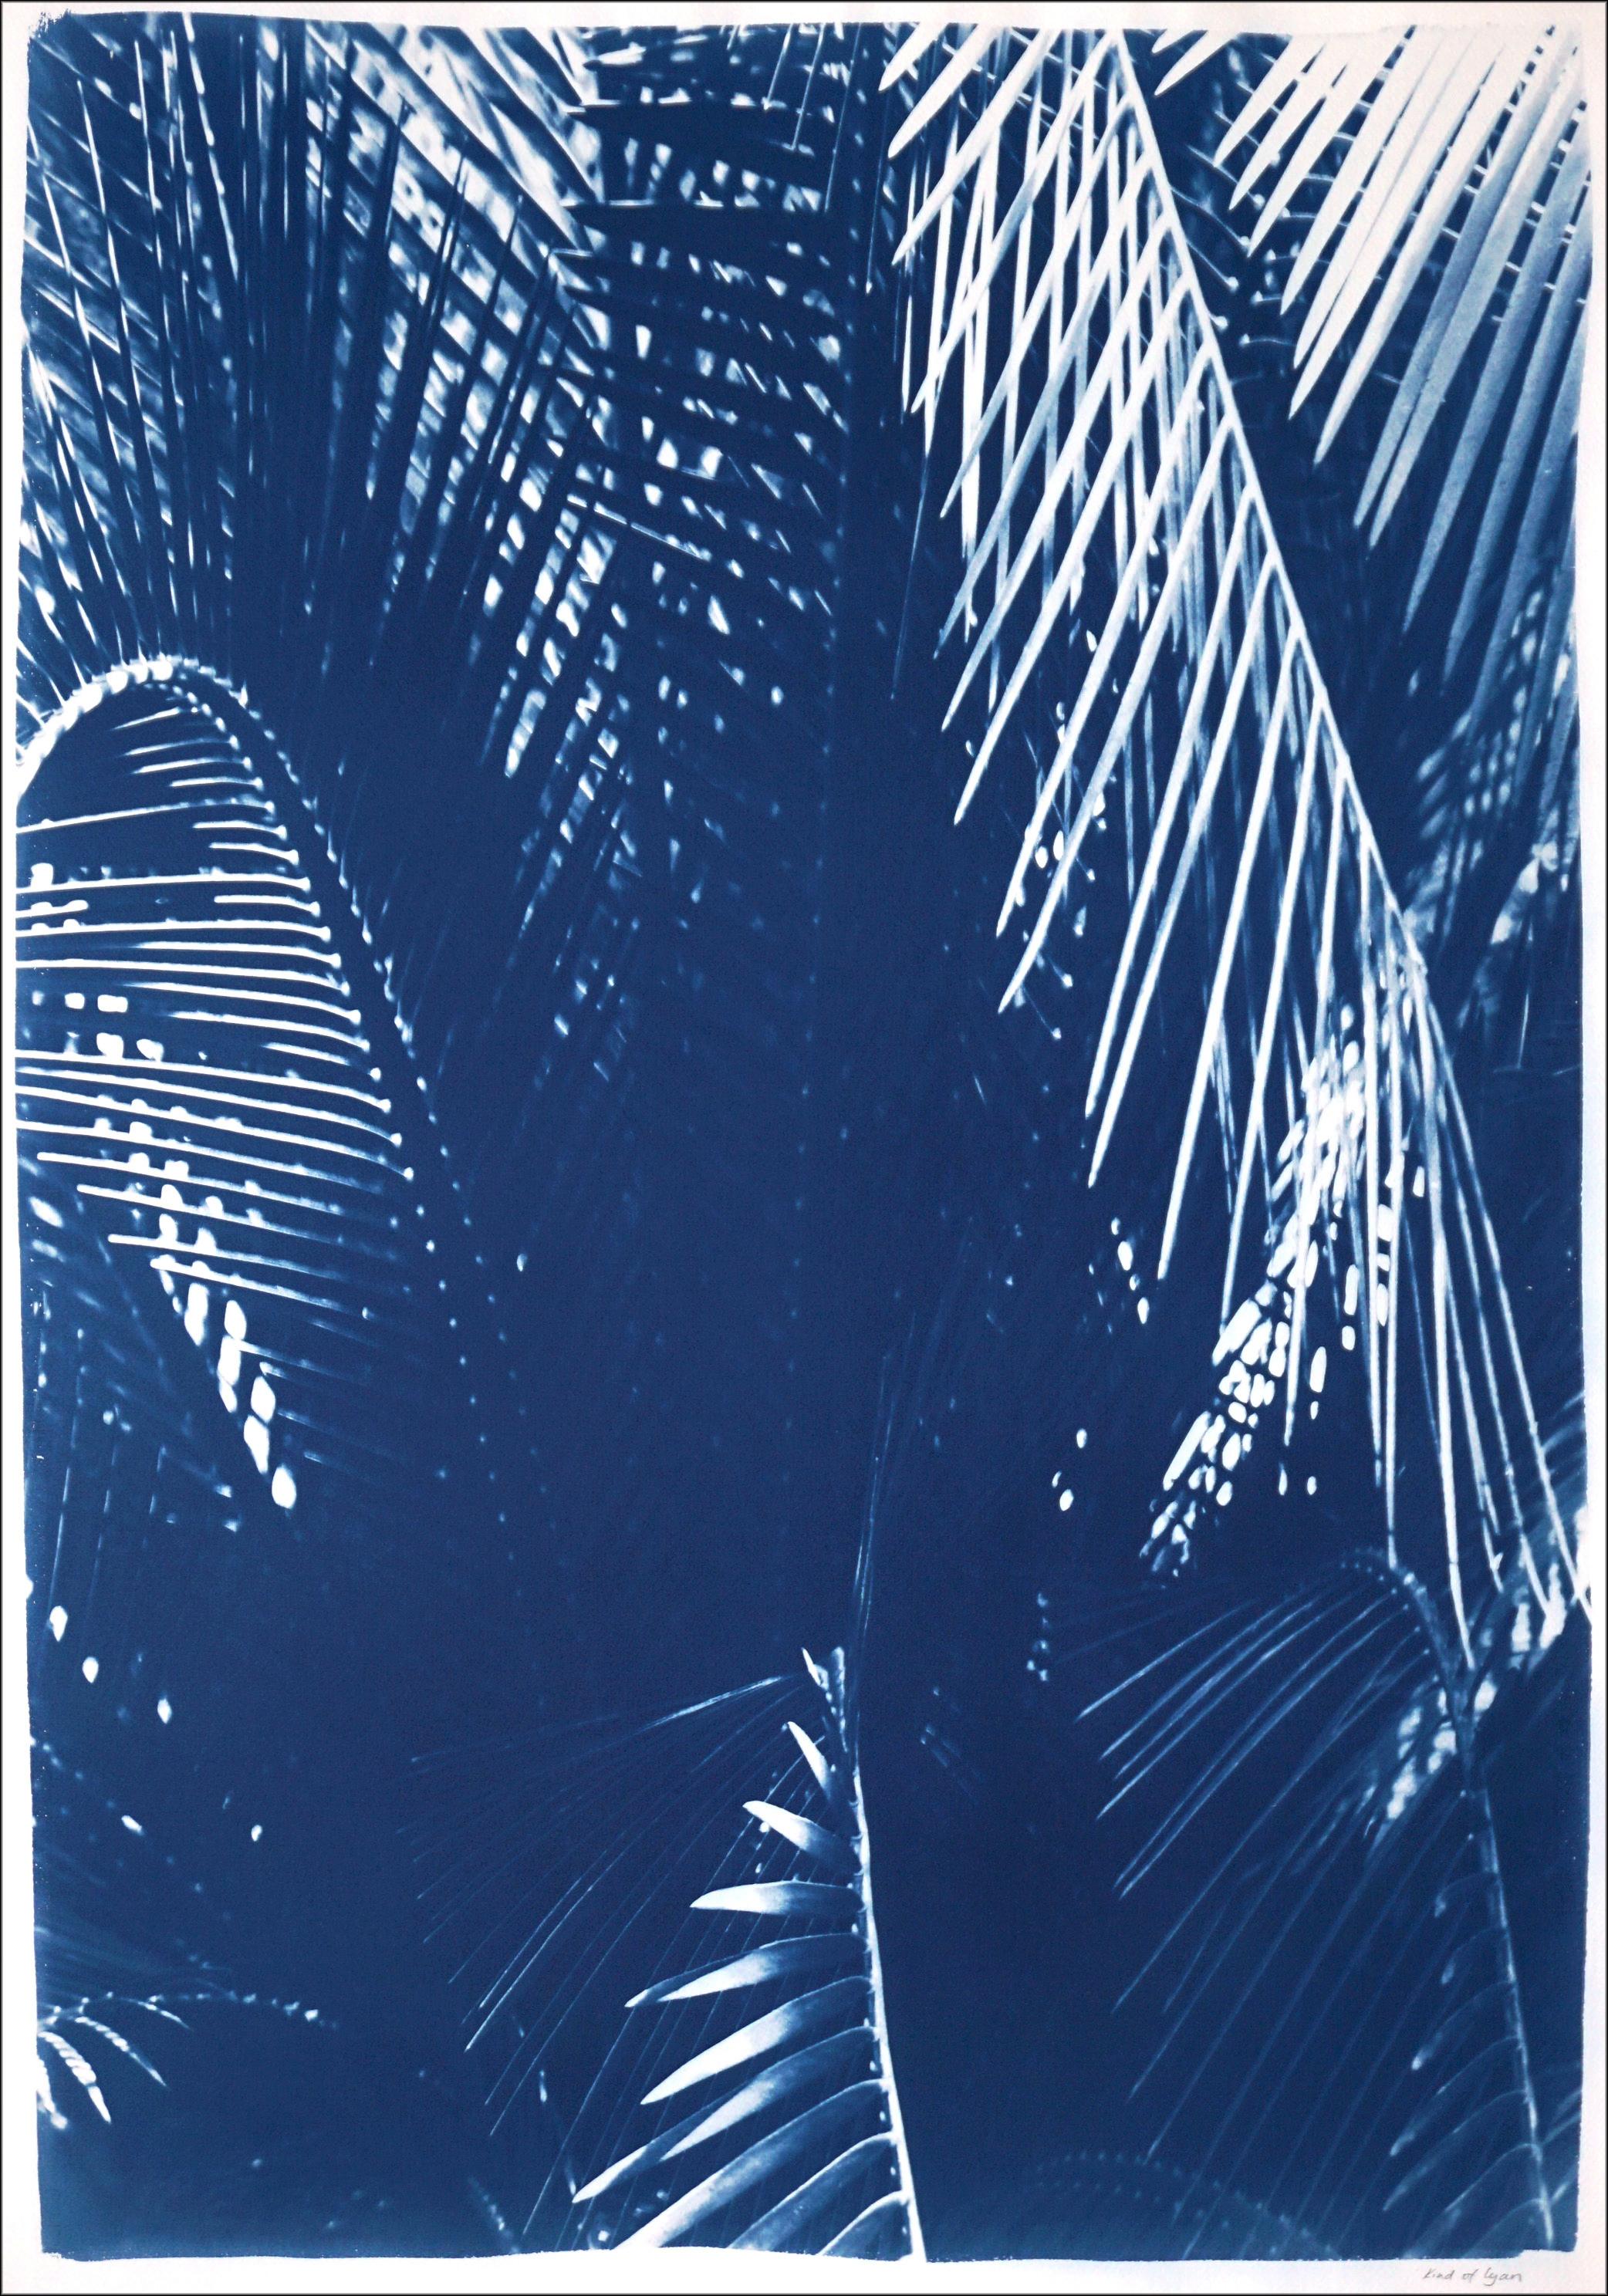 Botanical Triptych Cyanotype Print of Shady Majesty Palm Leaves Garden in Blue  1